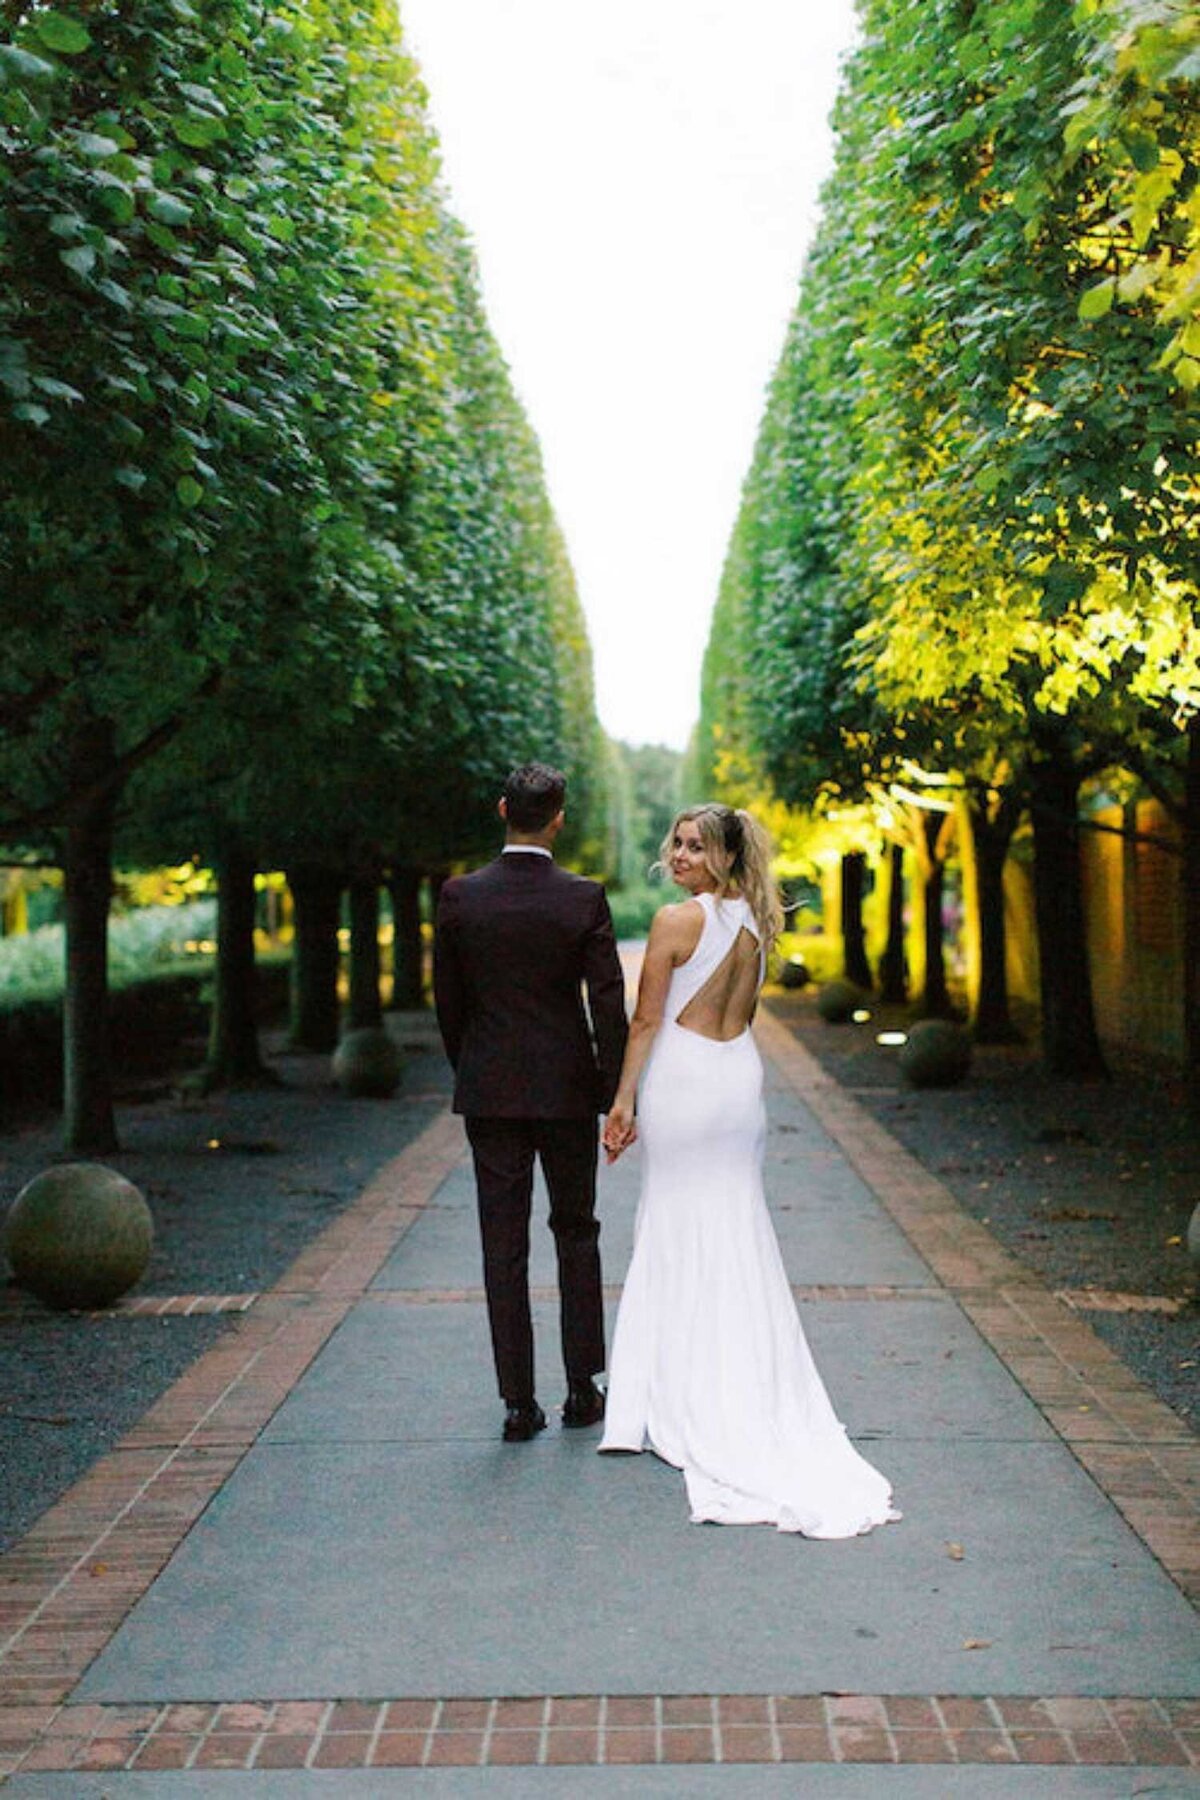 Stunning golden hour newlywed photos at the Chicago Botanic Garden during a luxury Chicago outdoor garden wedding.